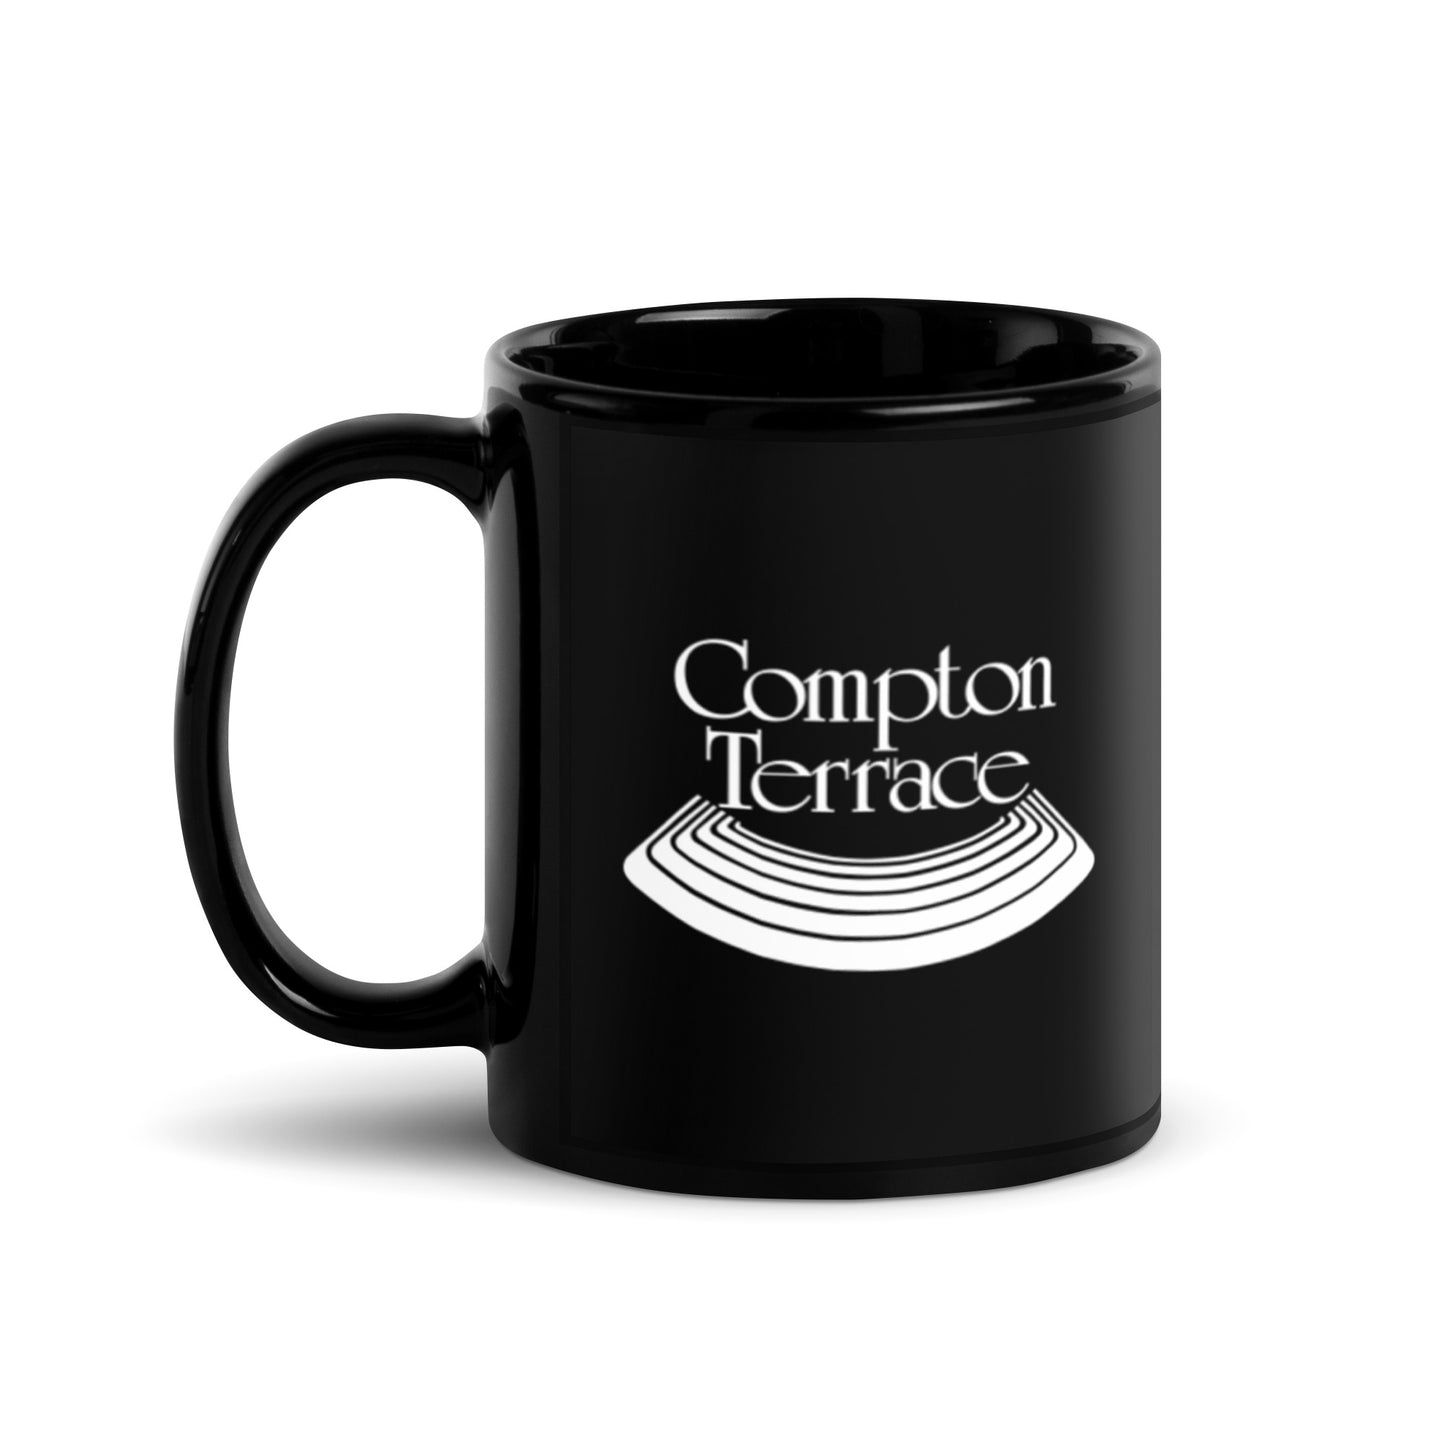 Compton Terrace Coffee Mug